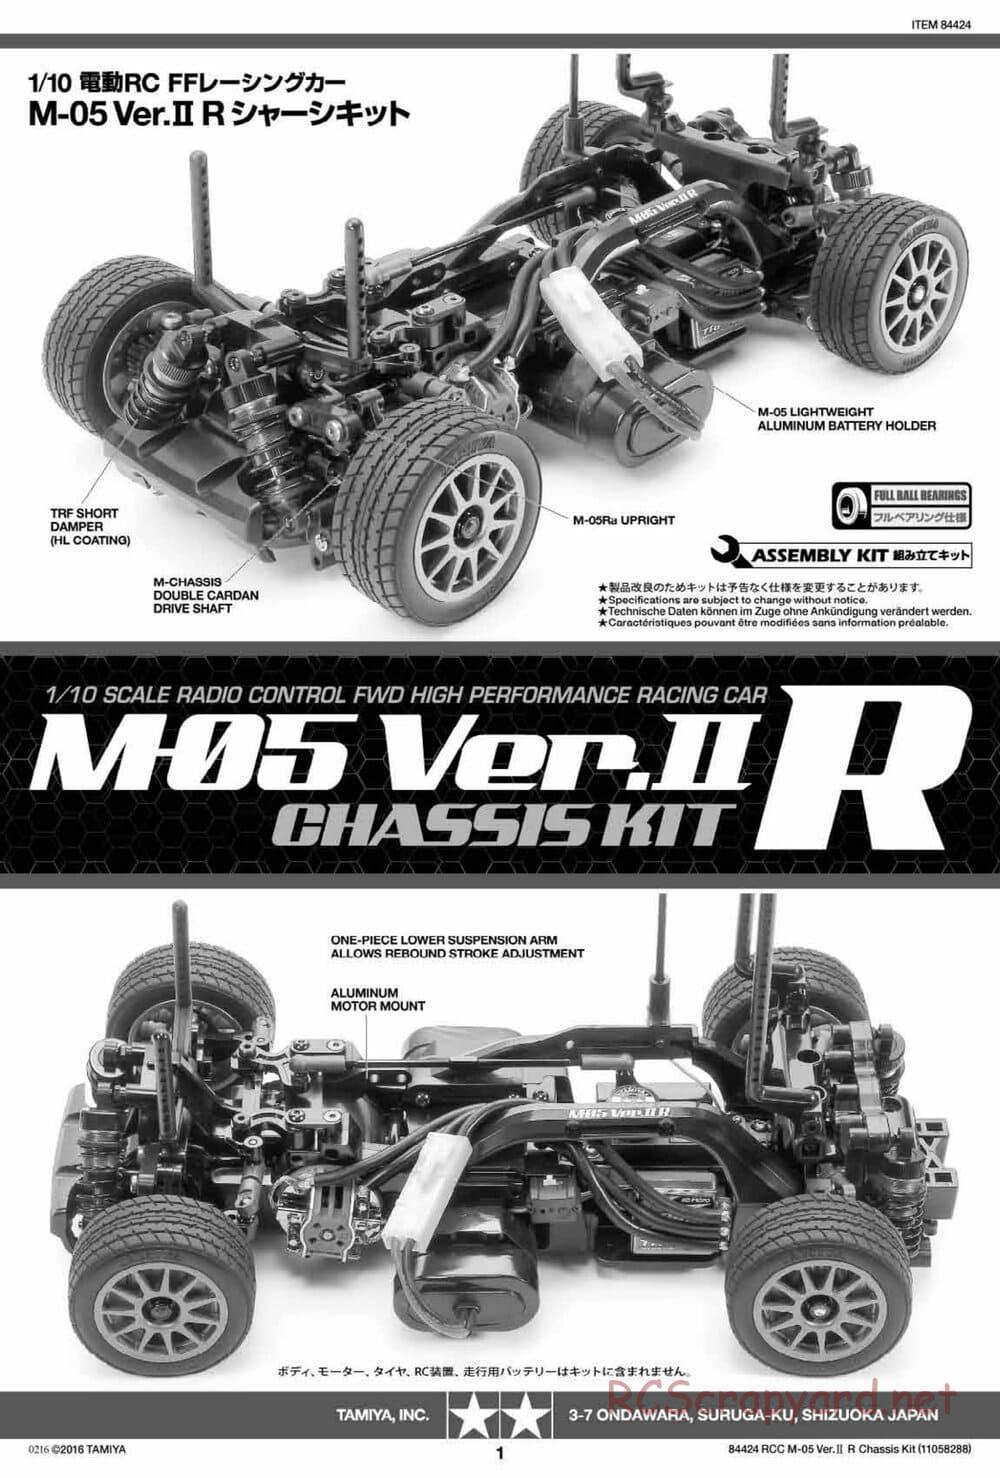 Tamiya - M-05 Ver.II R Chassis Chassis - Manual - Page 1